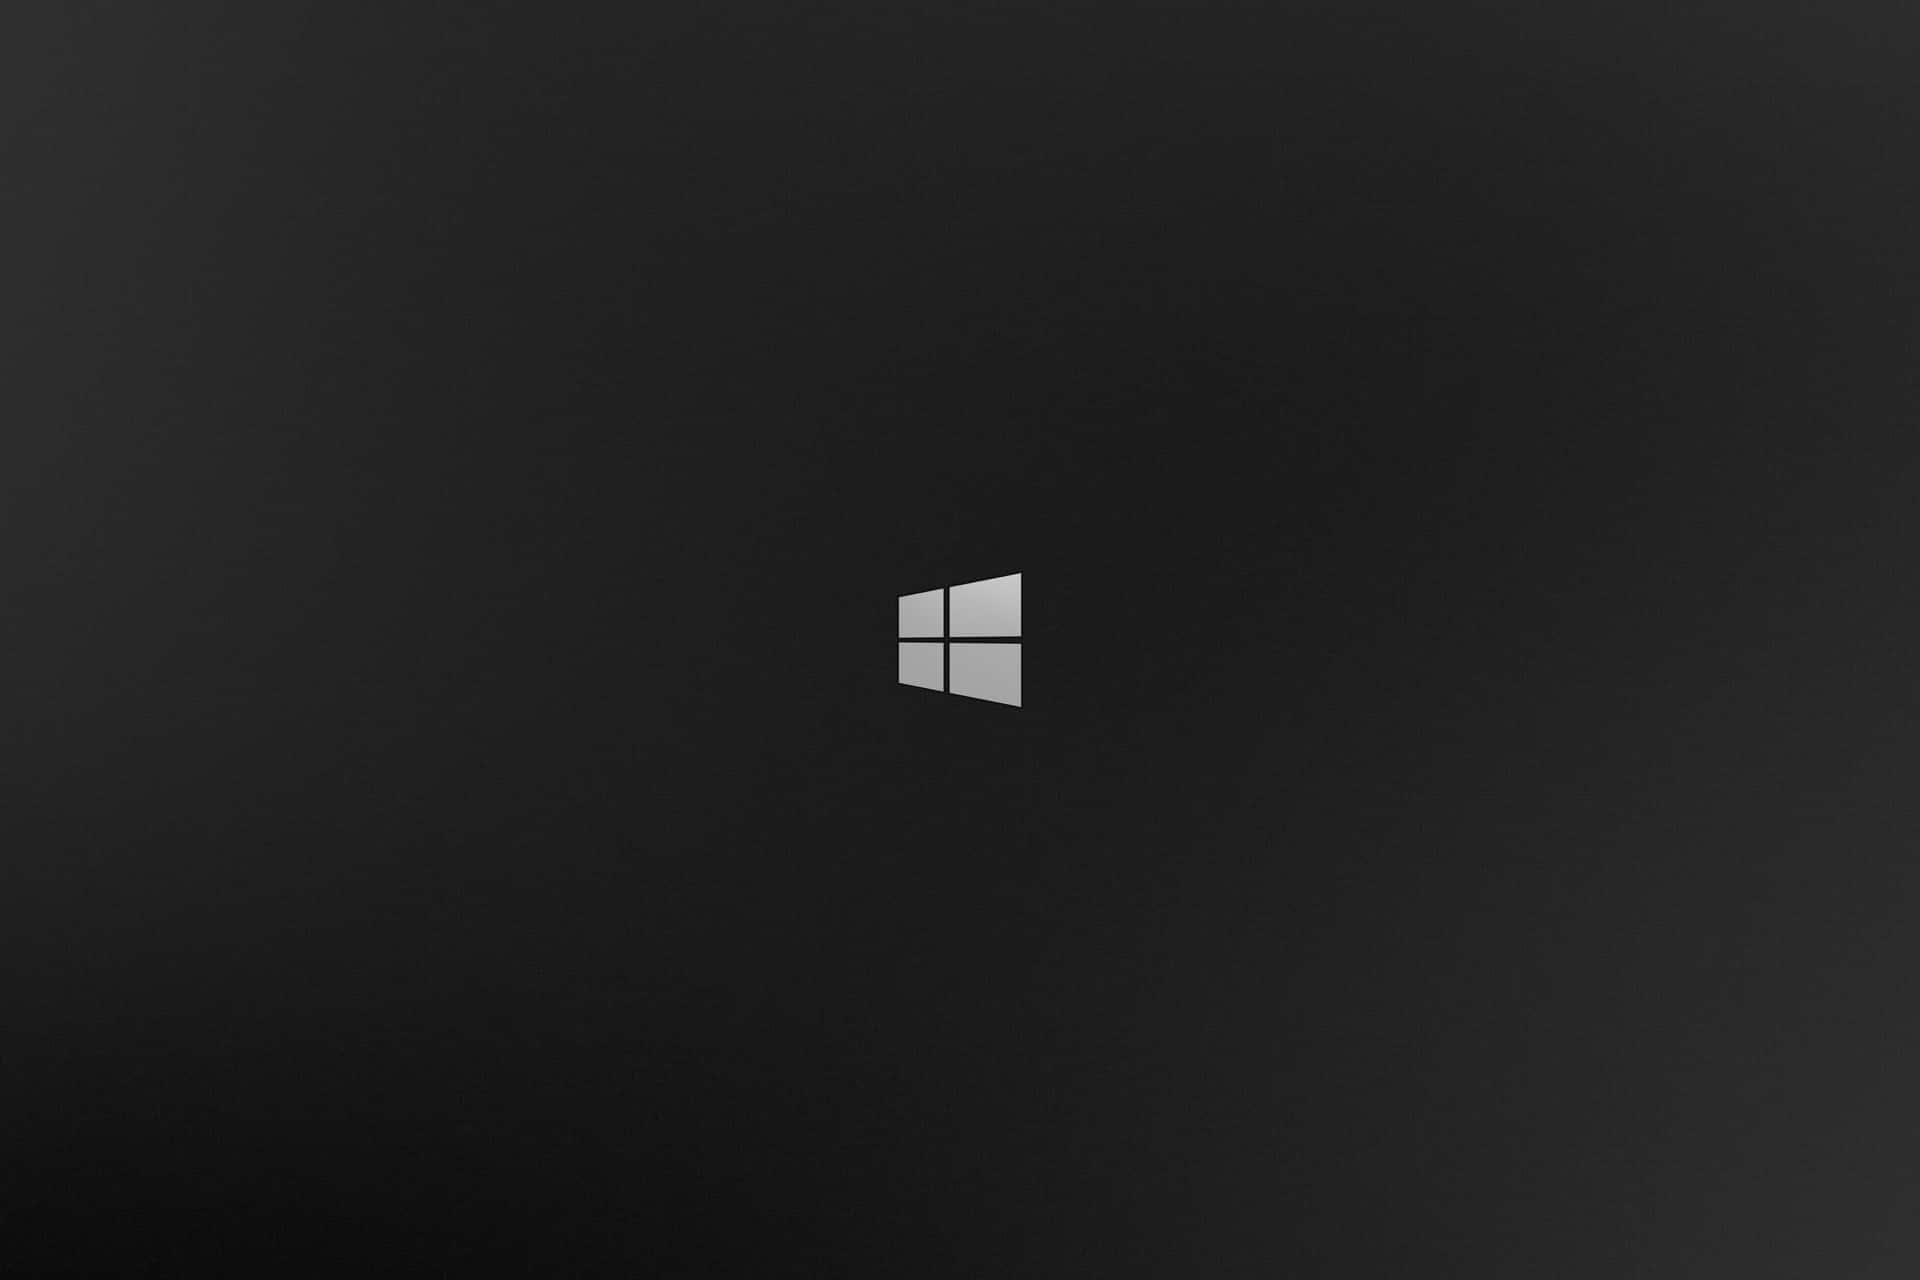 Windows 1 4272 X 2848 Wallpaper